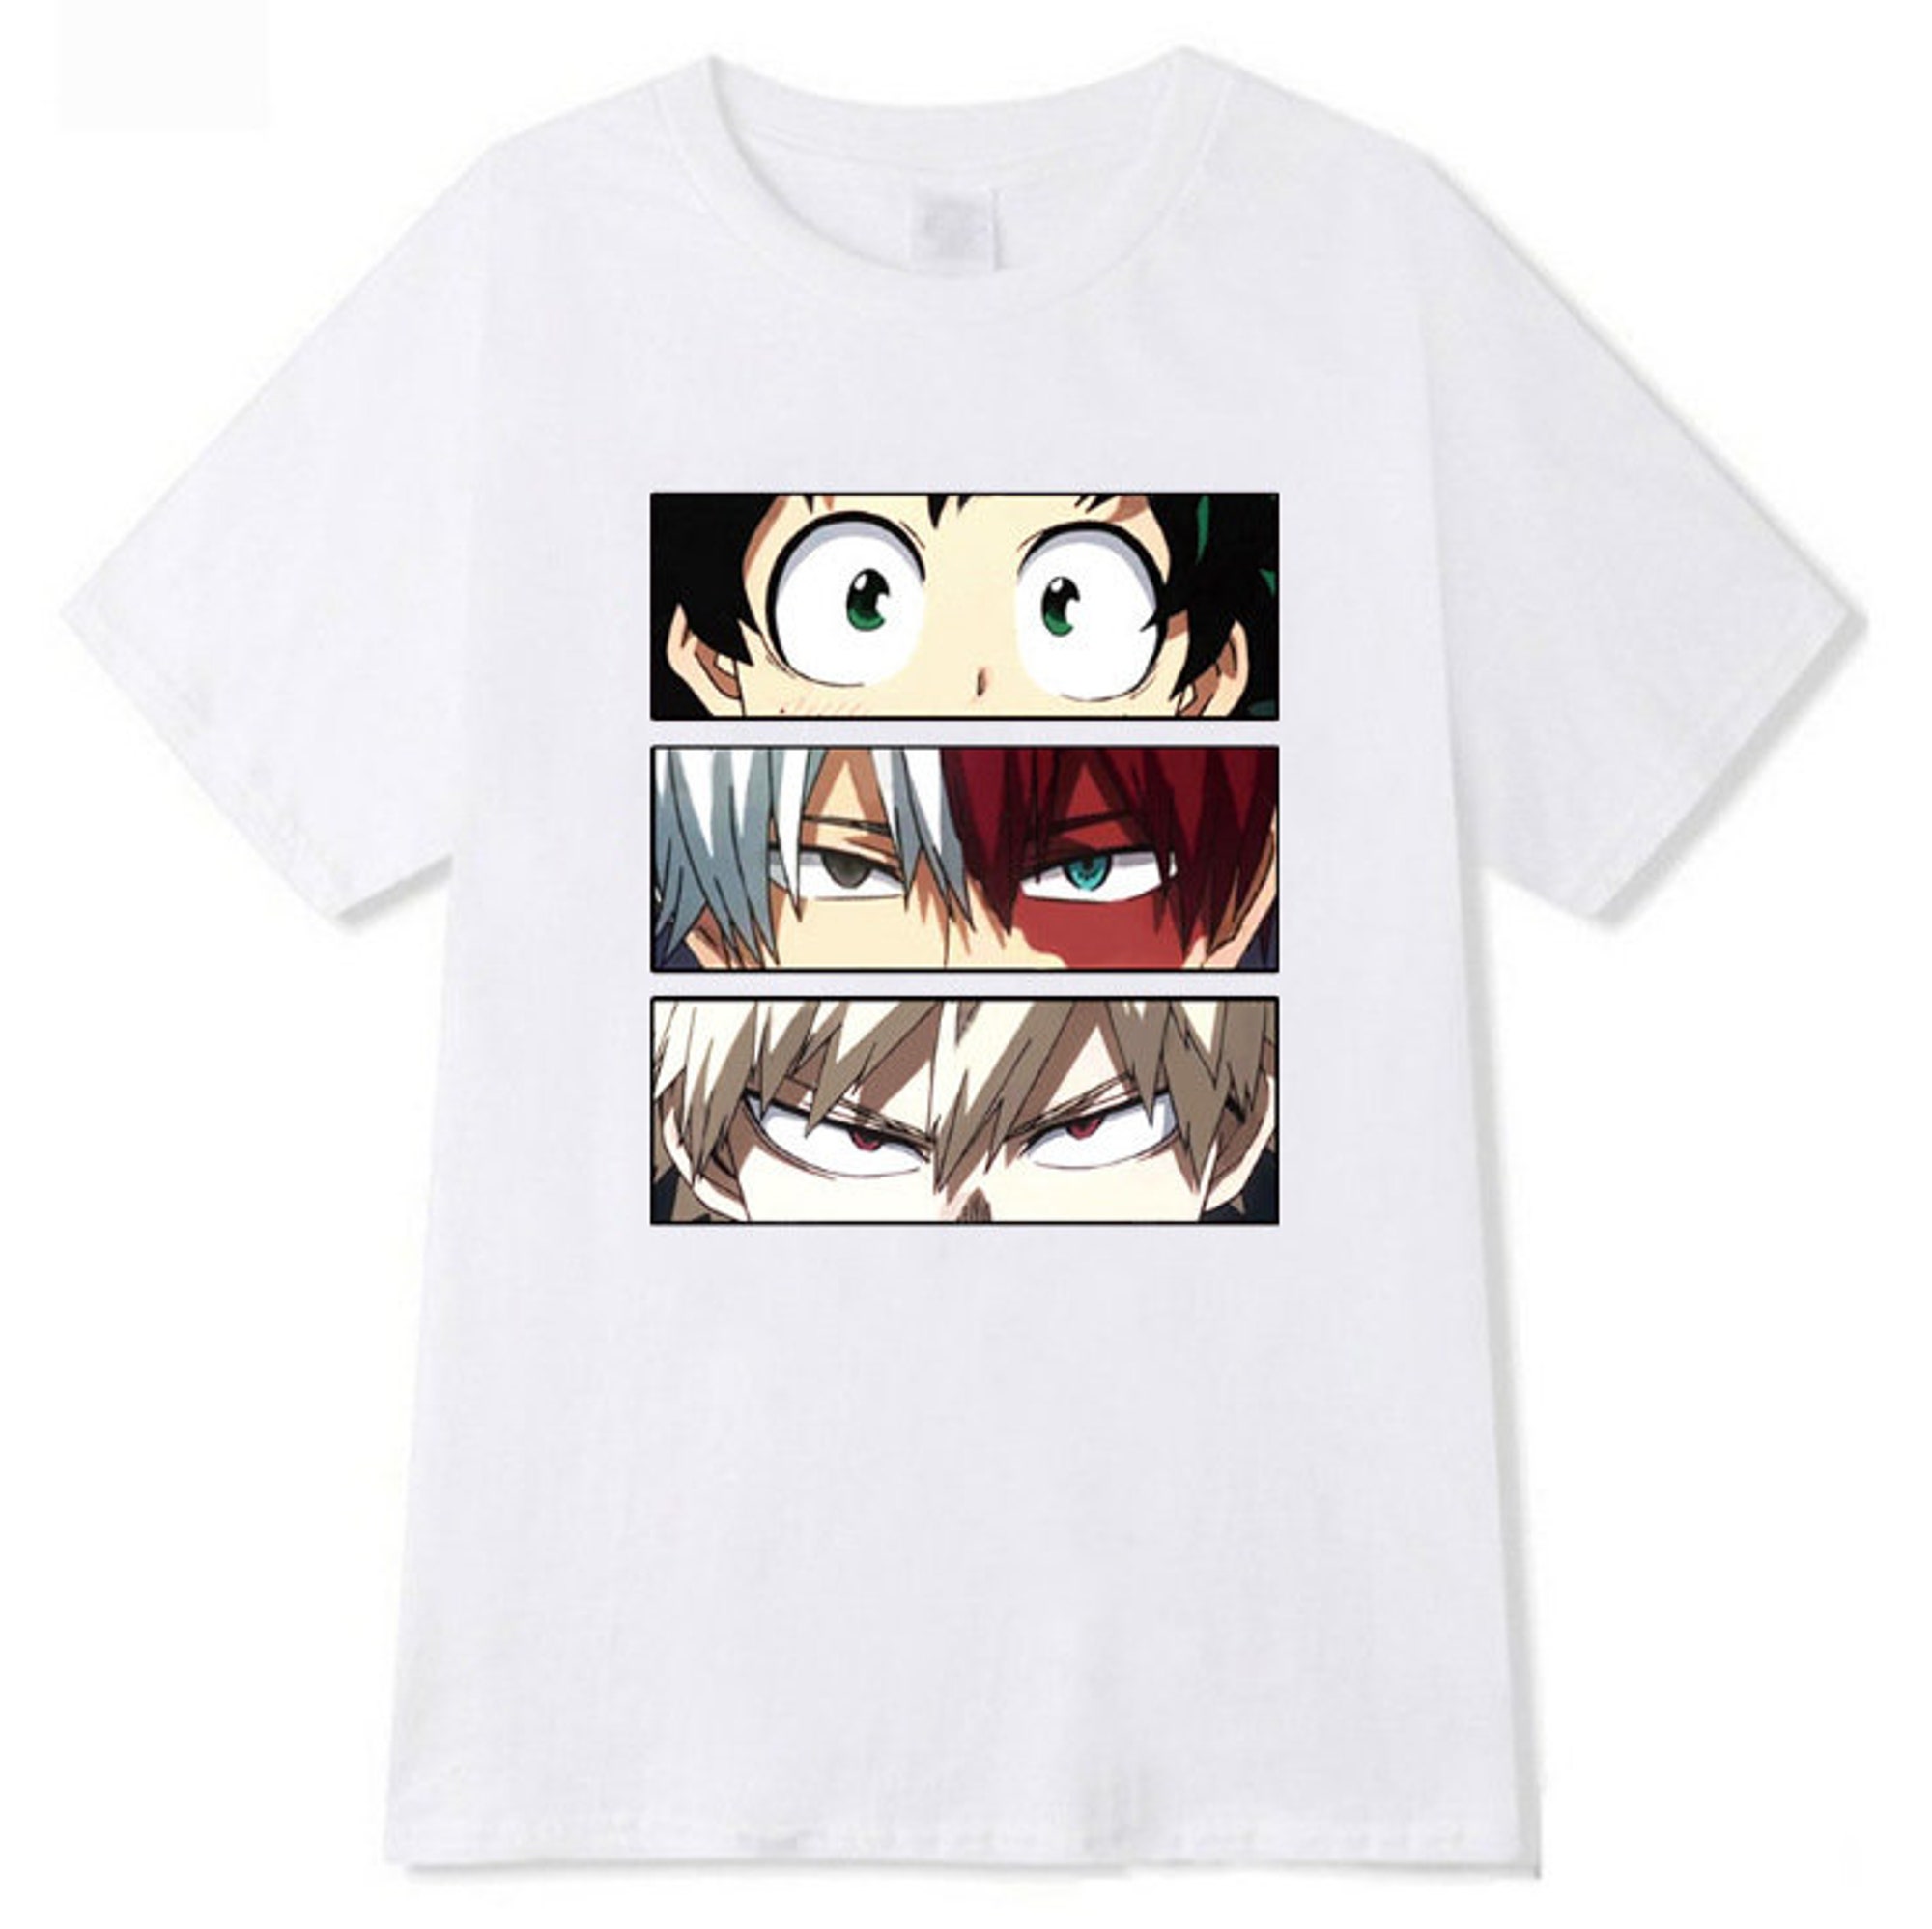 Discover My Hero Academia Shirt, Anime Graphic Tee